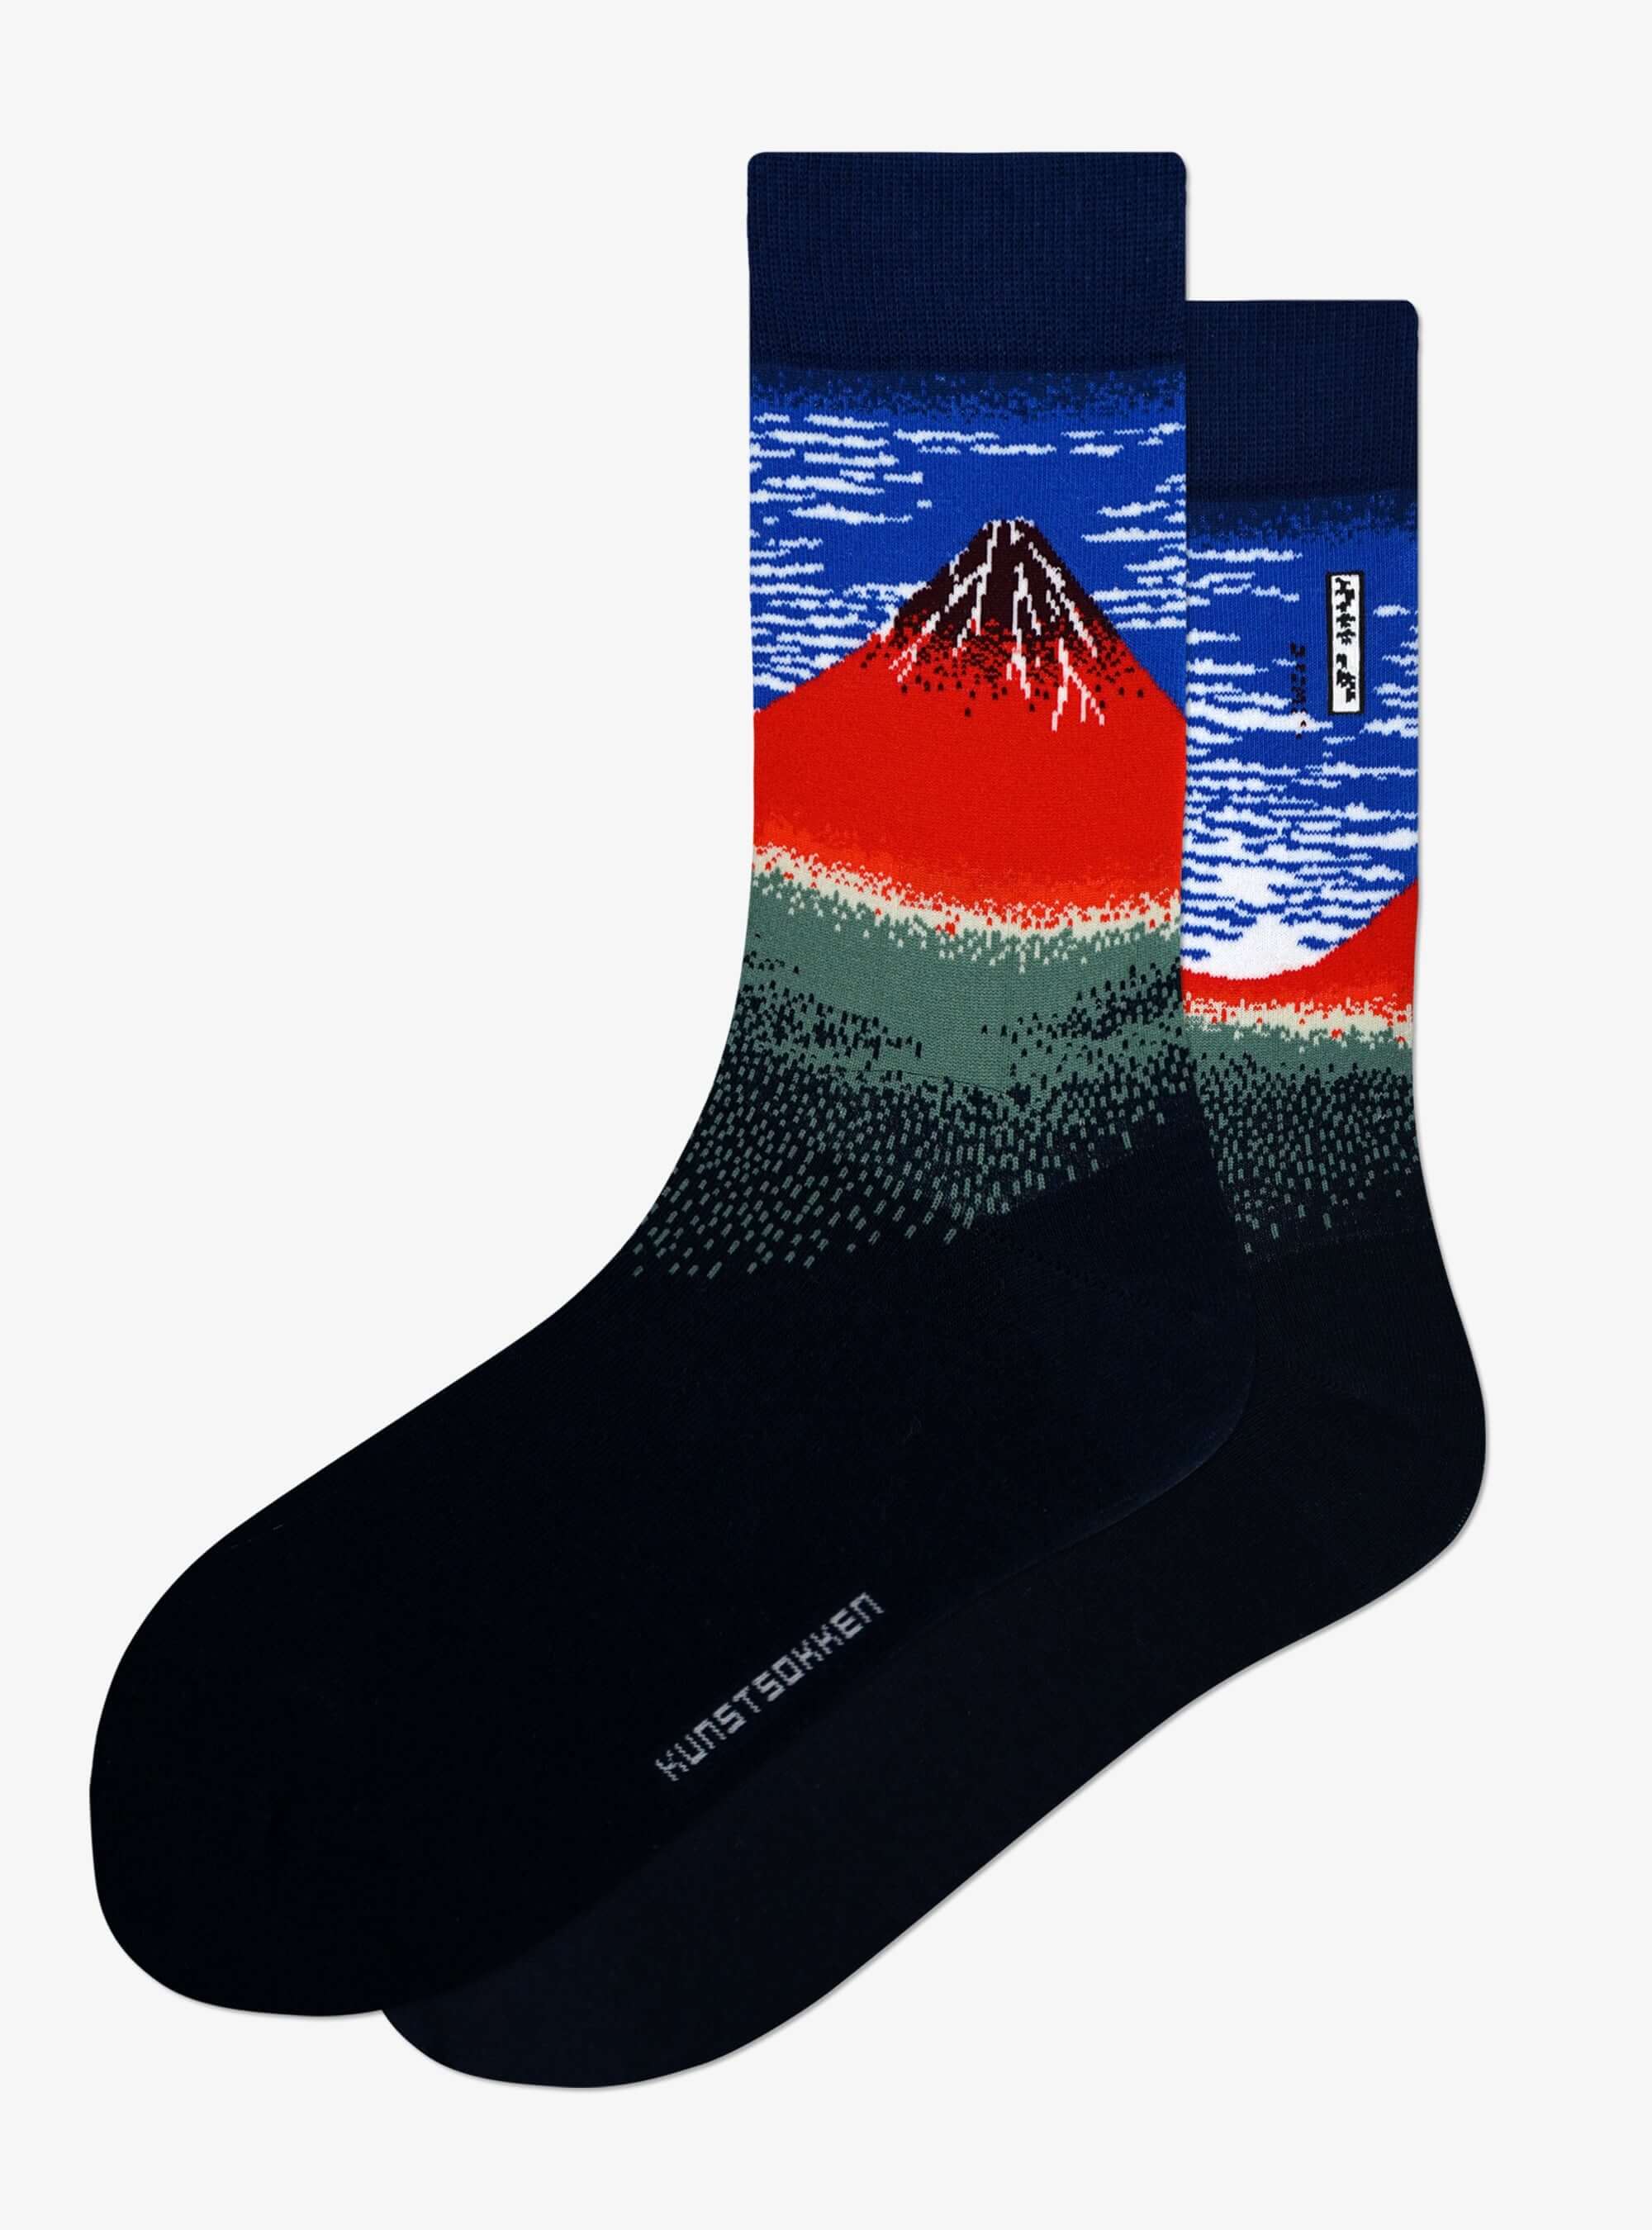 Red Fuji